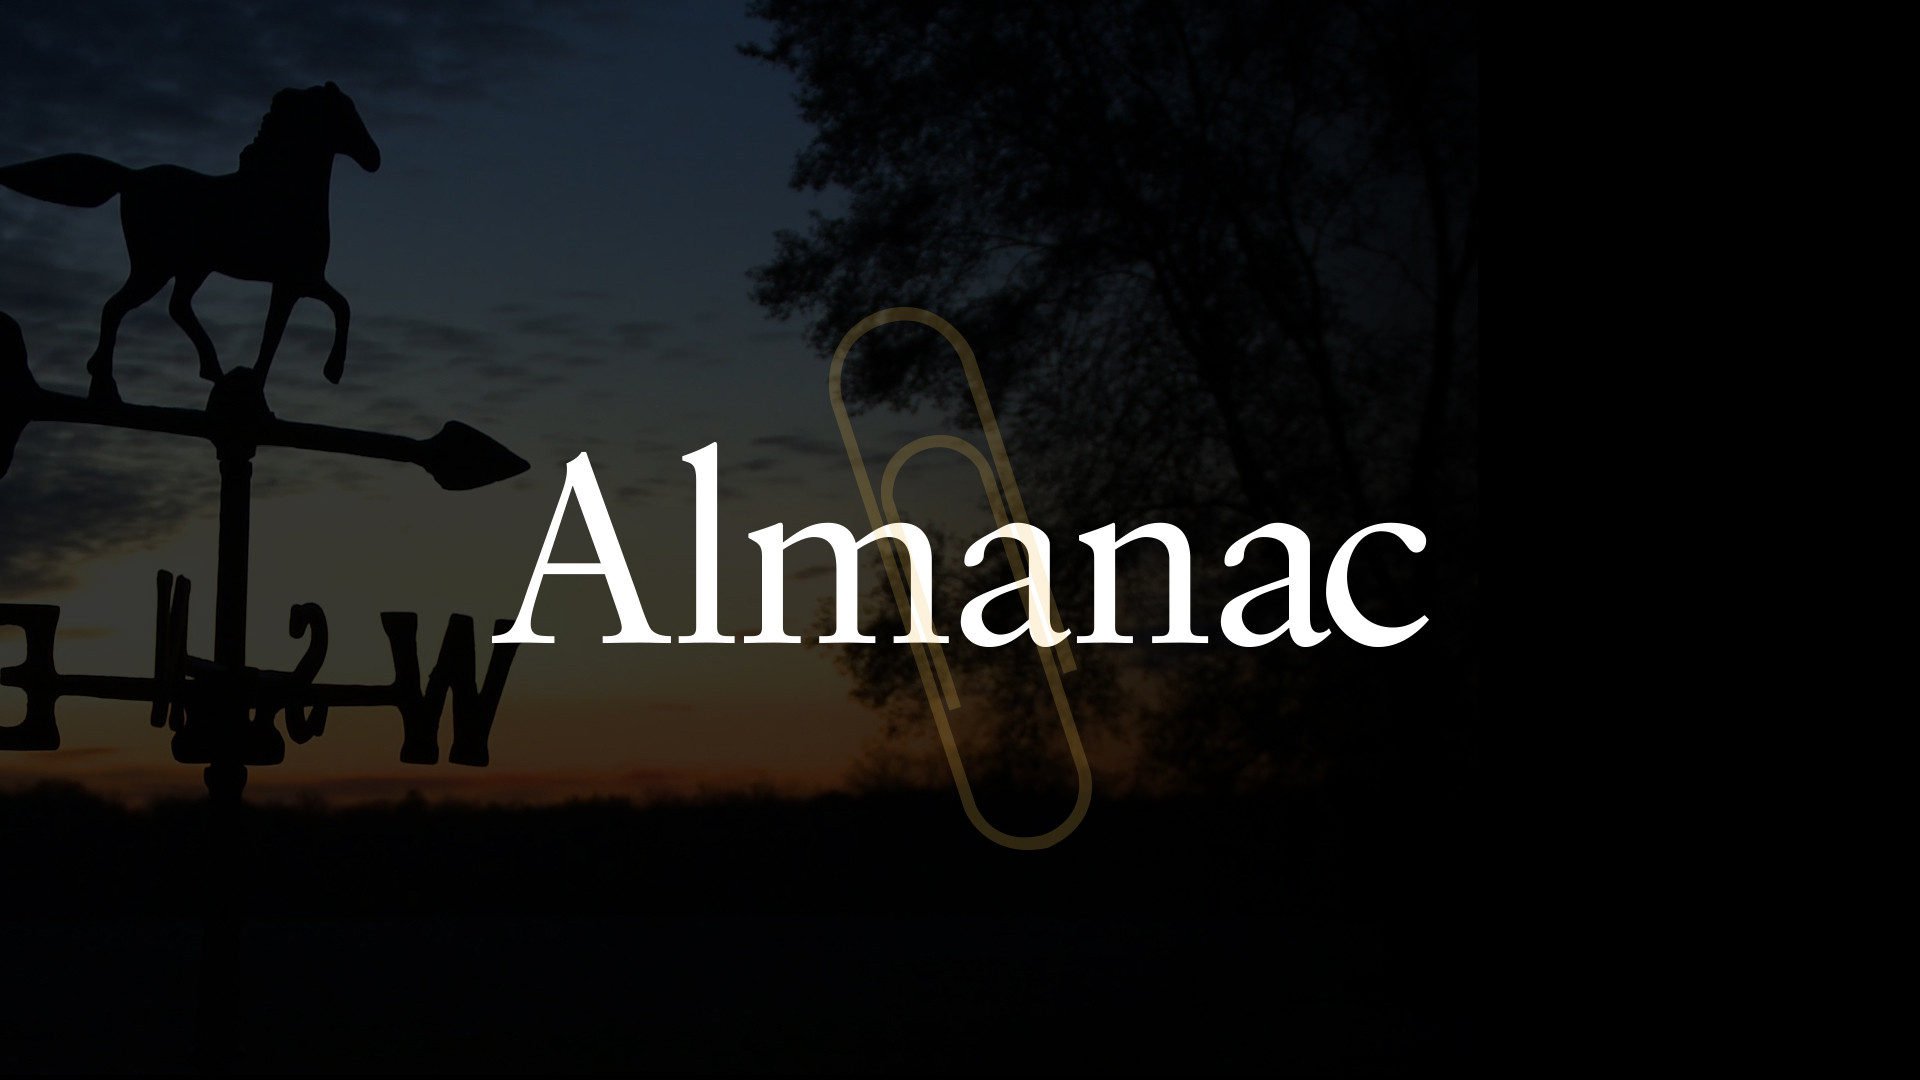 Almanac Backgrounds on Wallpapers Vista